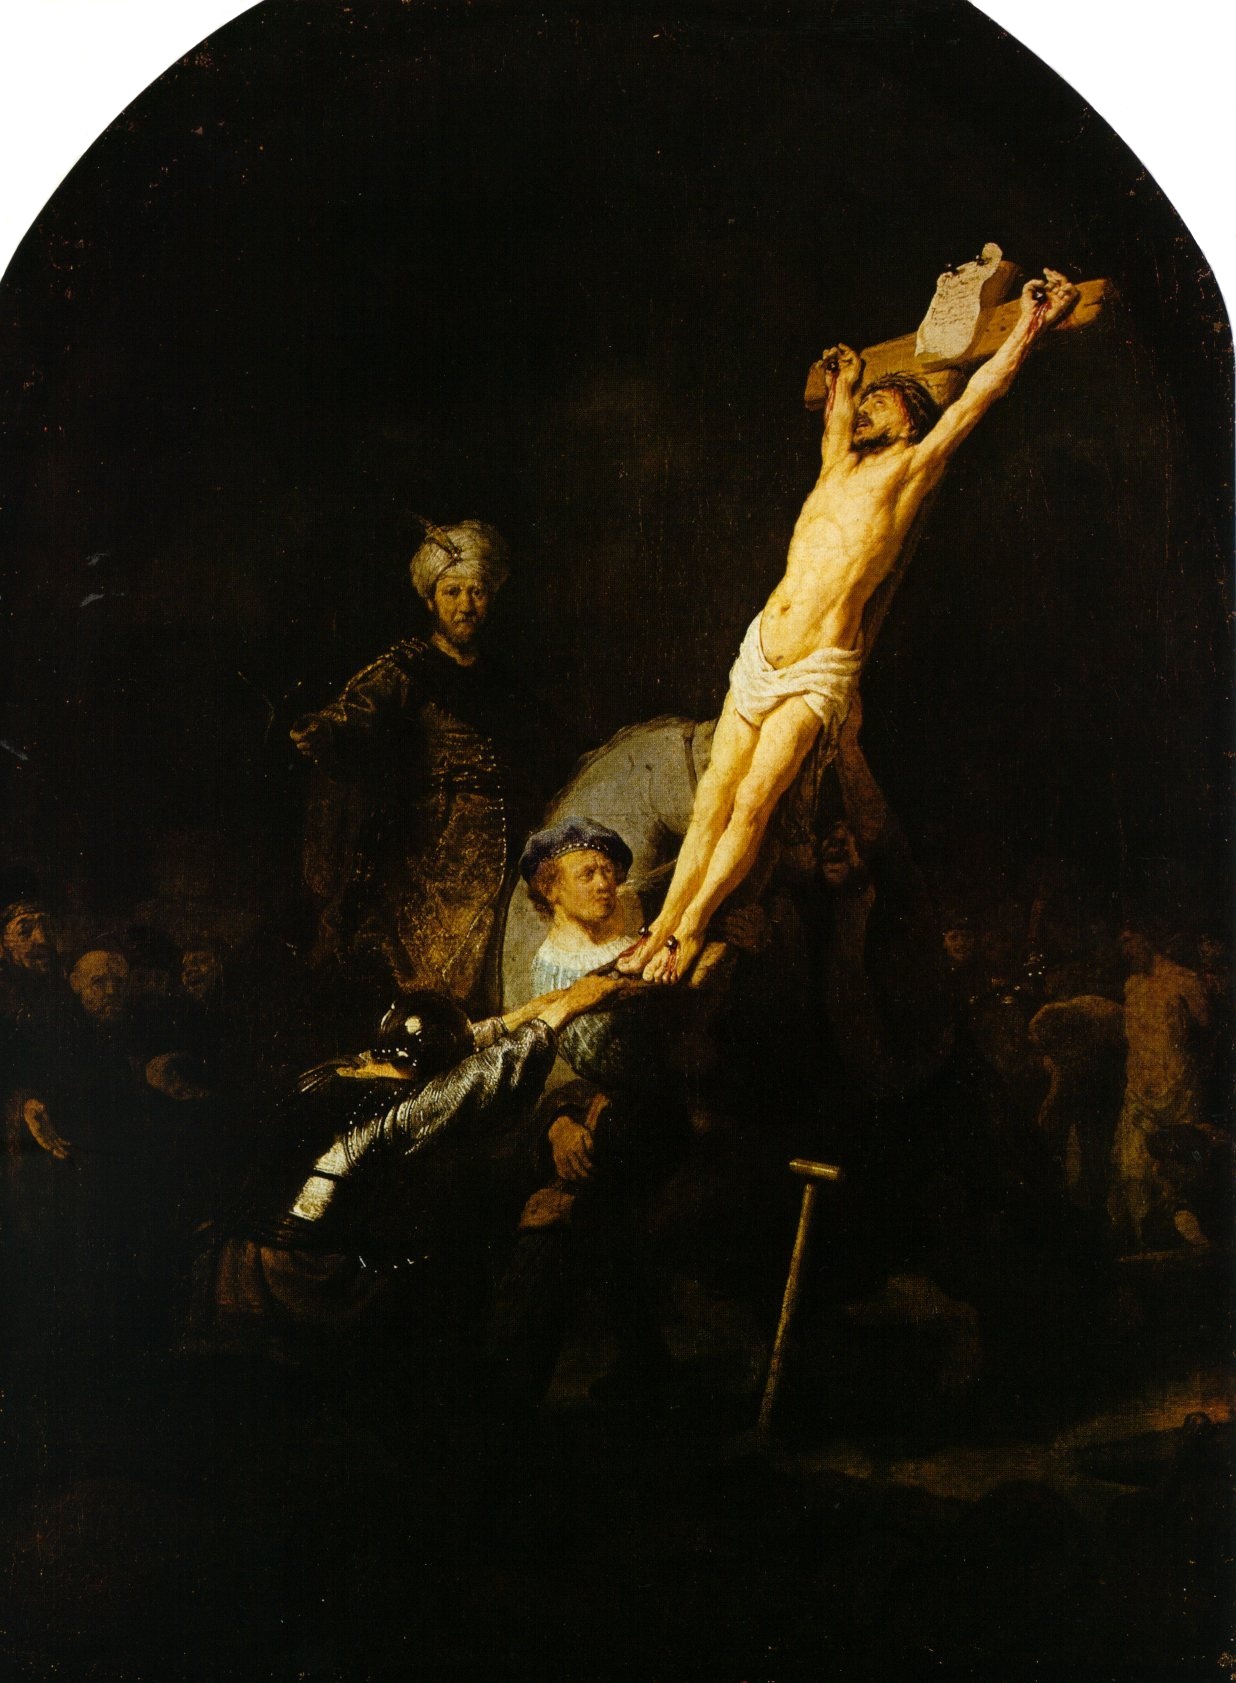 Рембрандт Харменс ван Рейн. "Воздвижение креста". 1633. Старая пинакотека, Мюнхен.